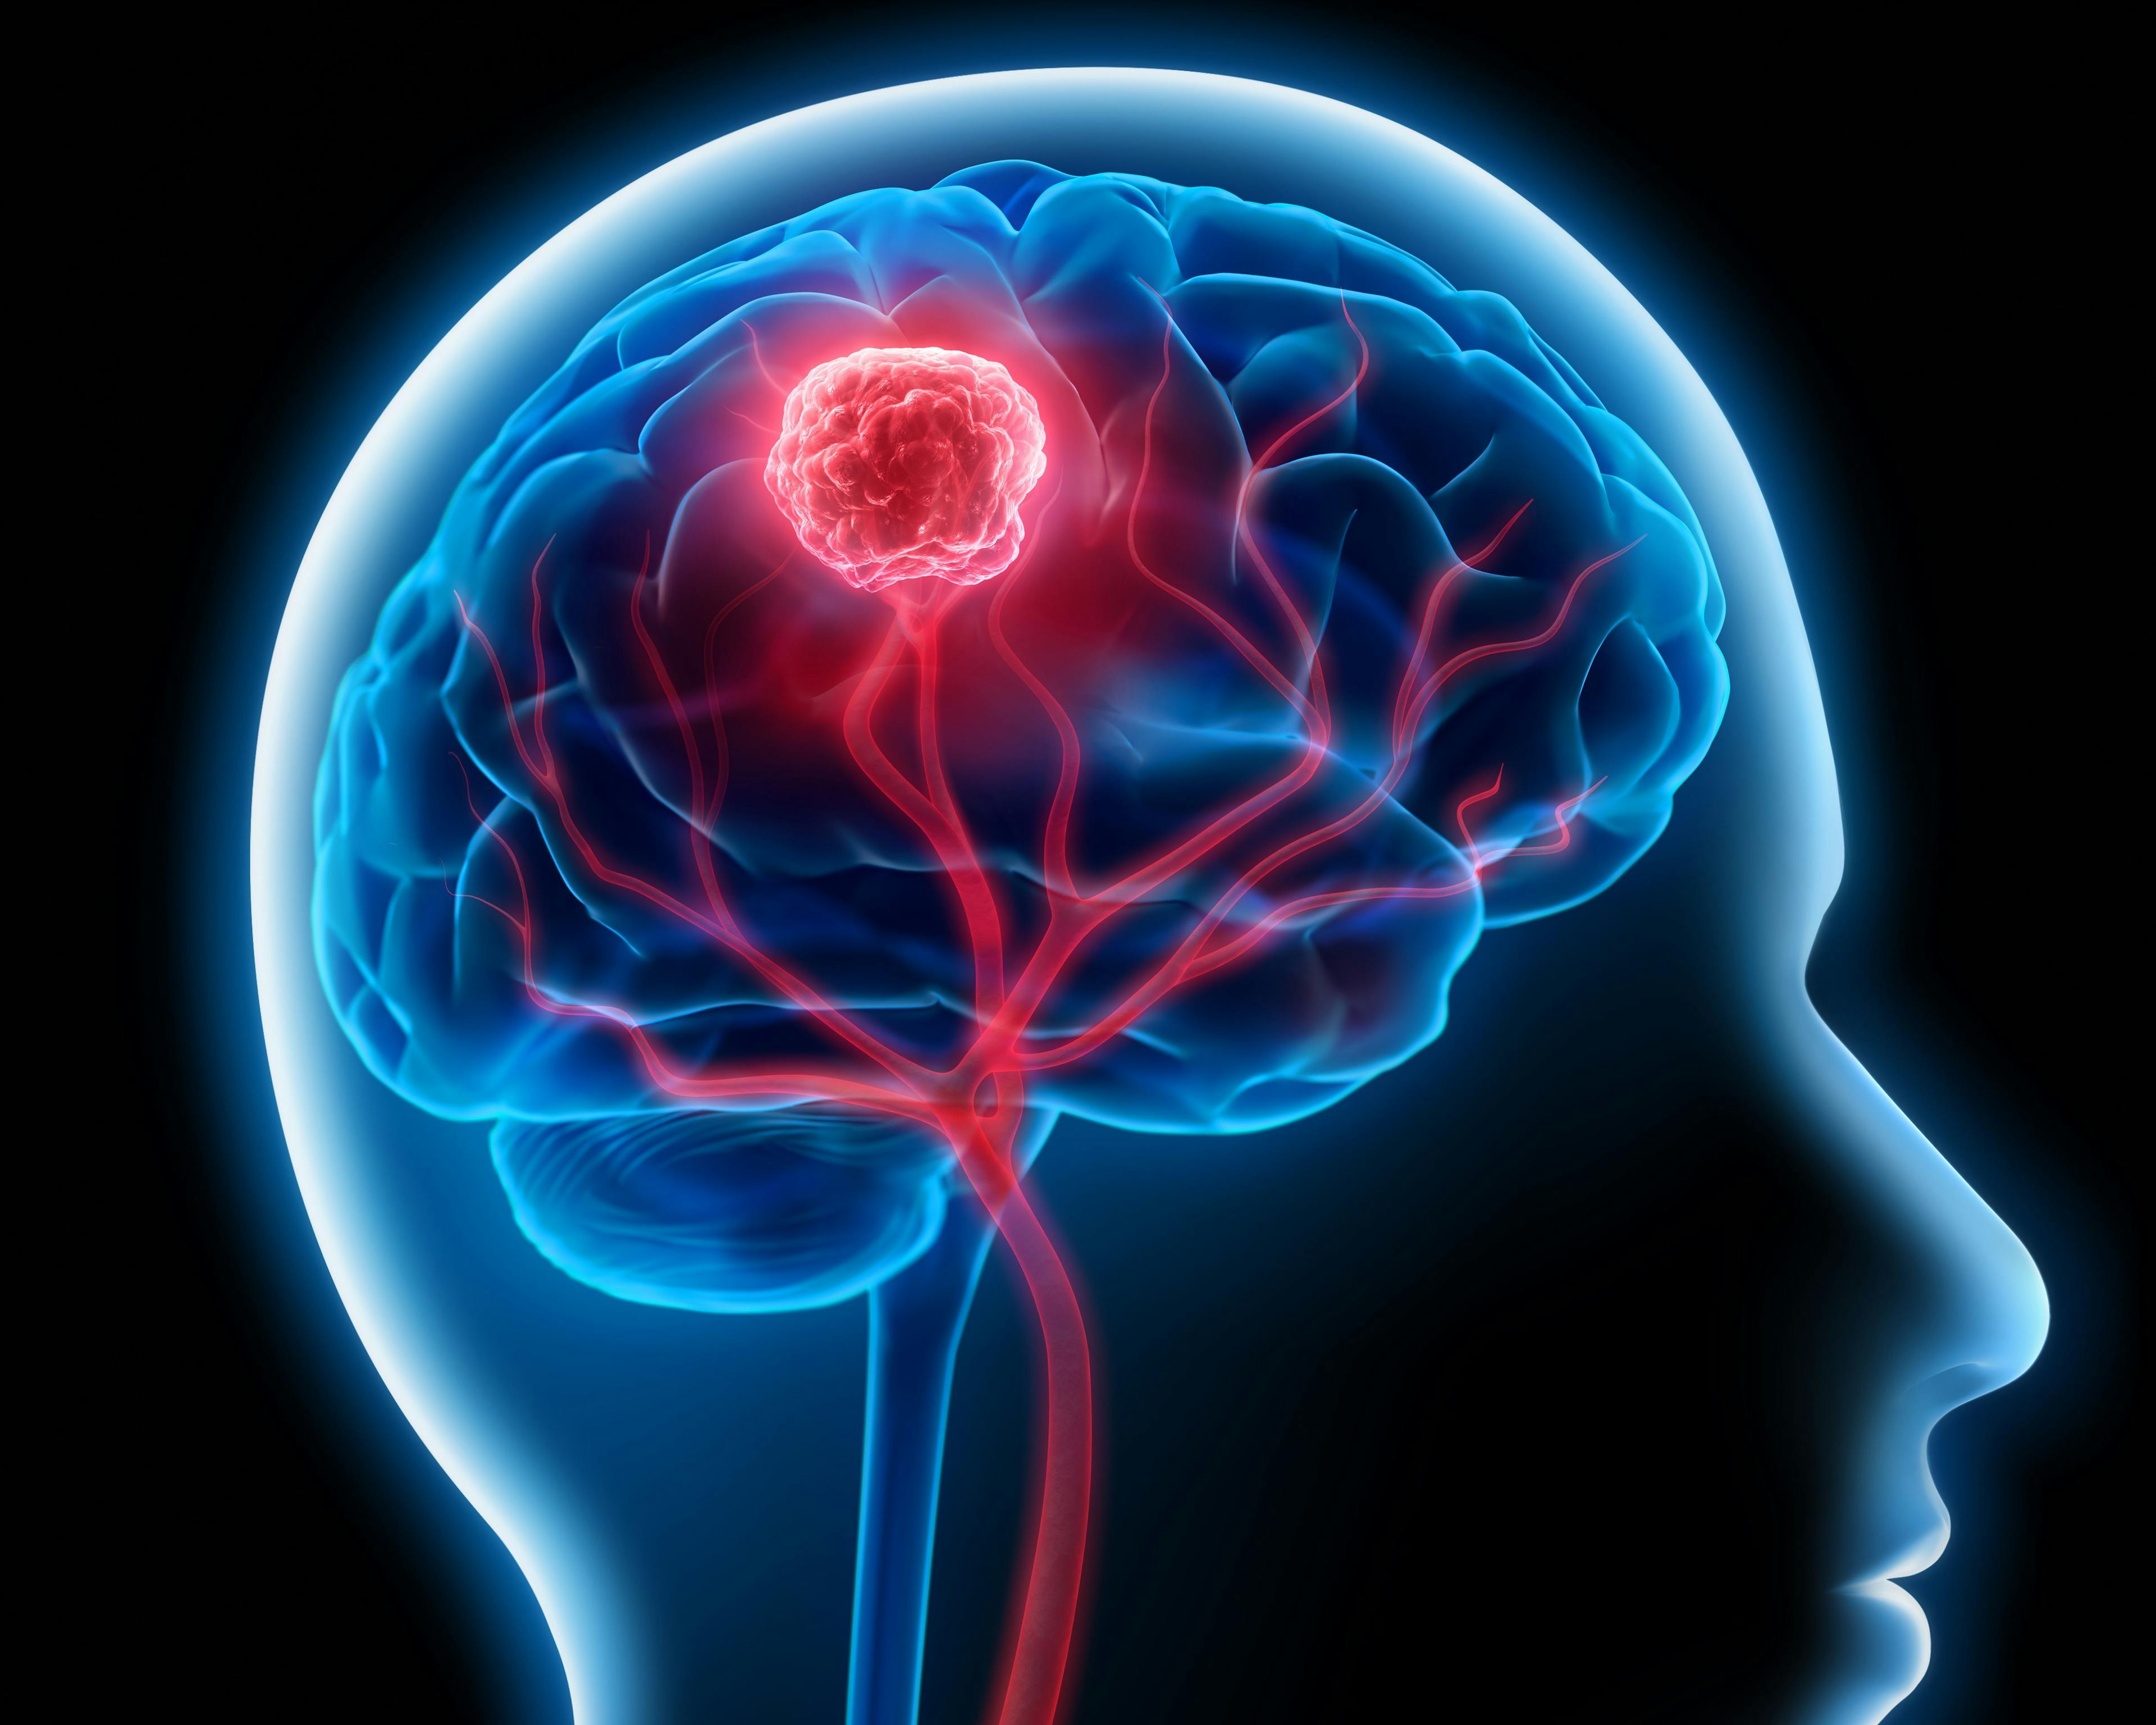 Tumor in brain : © peterschreiber.media - stock.adobe.com